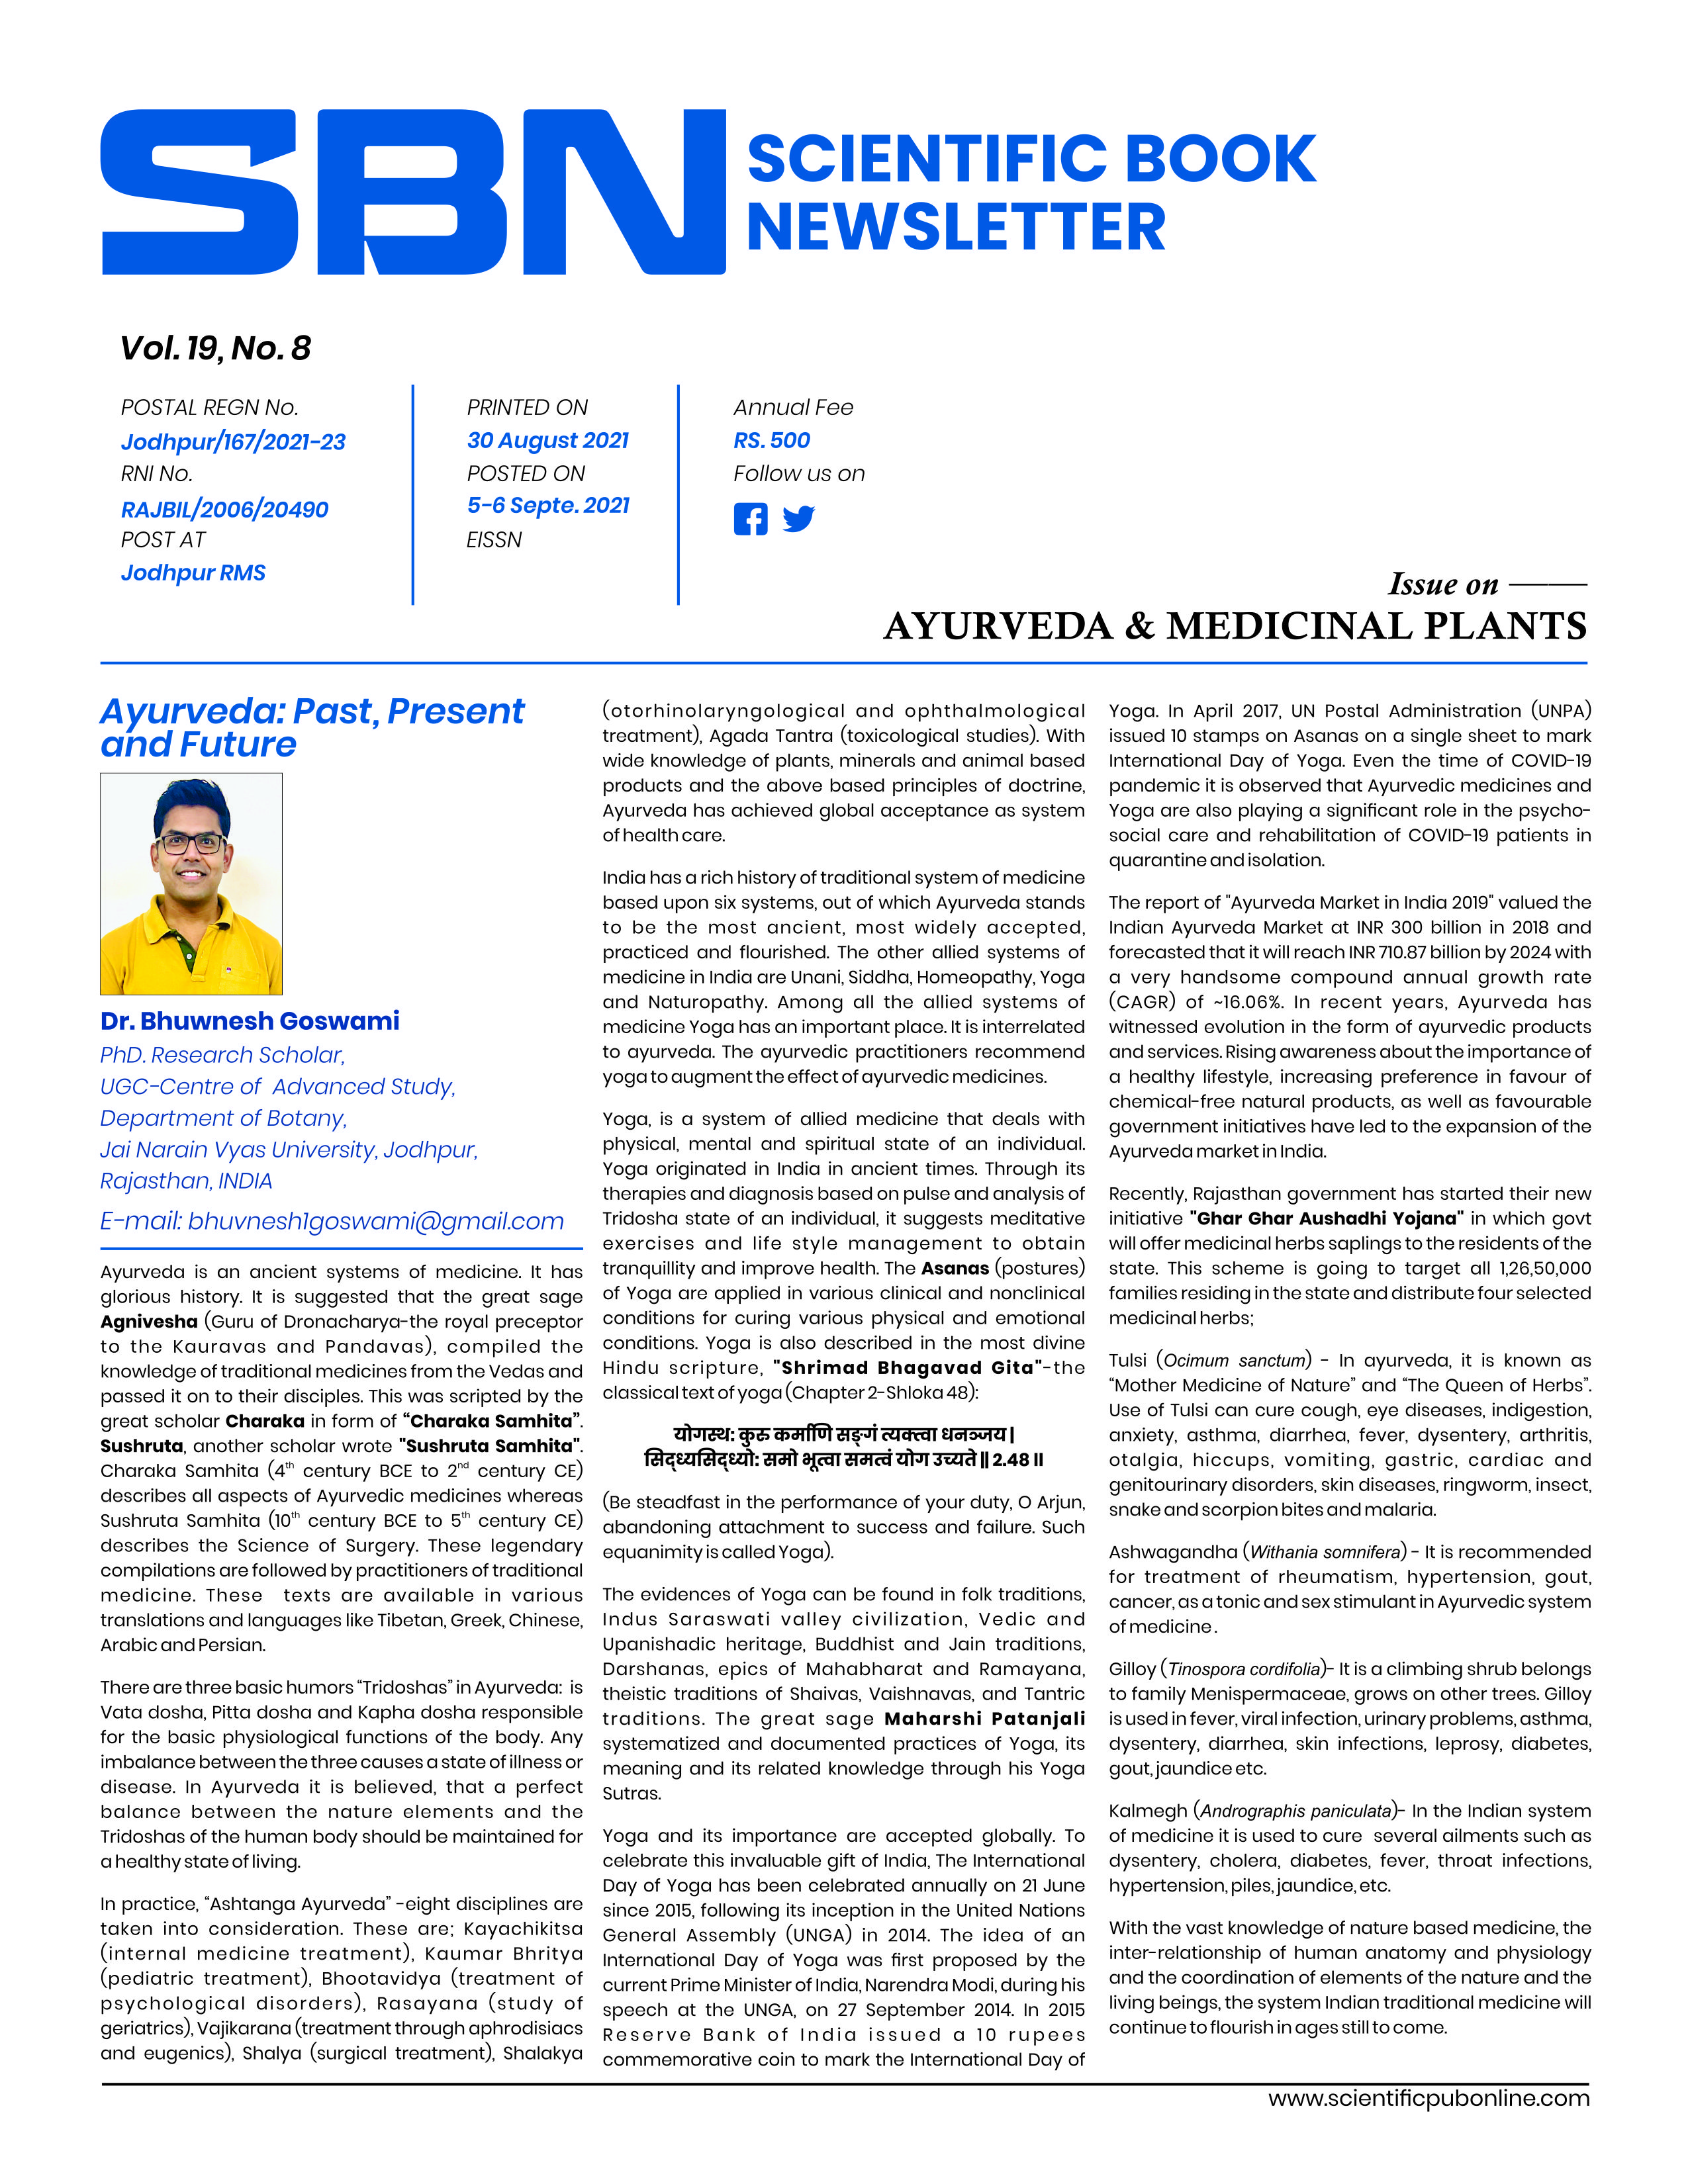 Ayurveda & Medicinal Plants, Scientific Book Newsletter Vol 19 Issue 08 August  2021